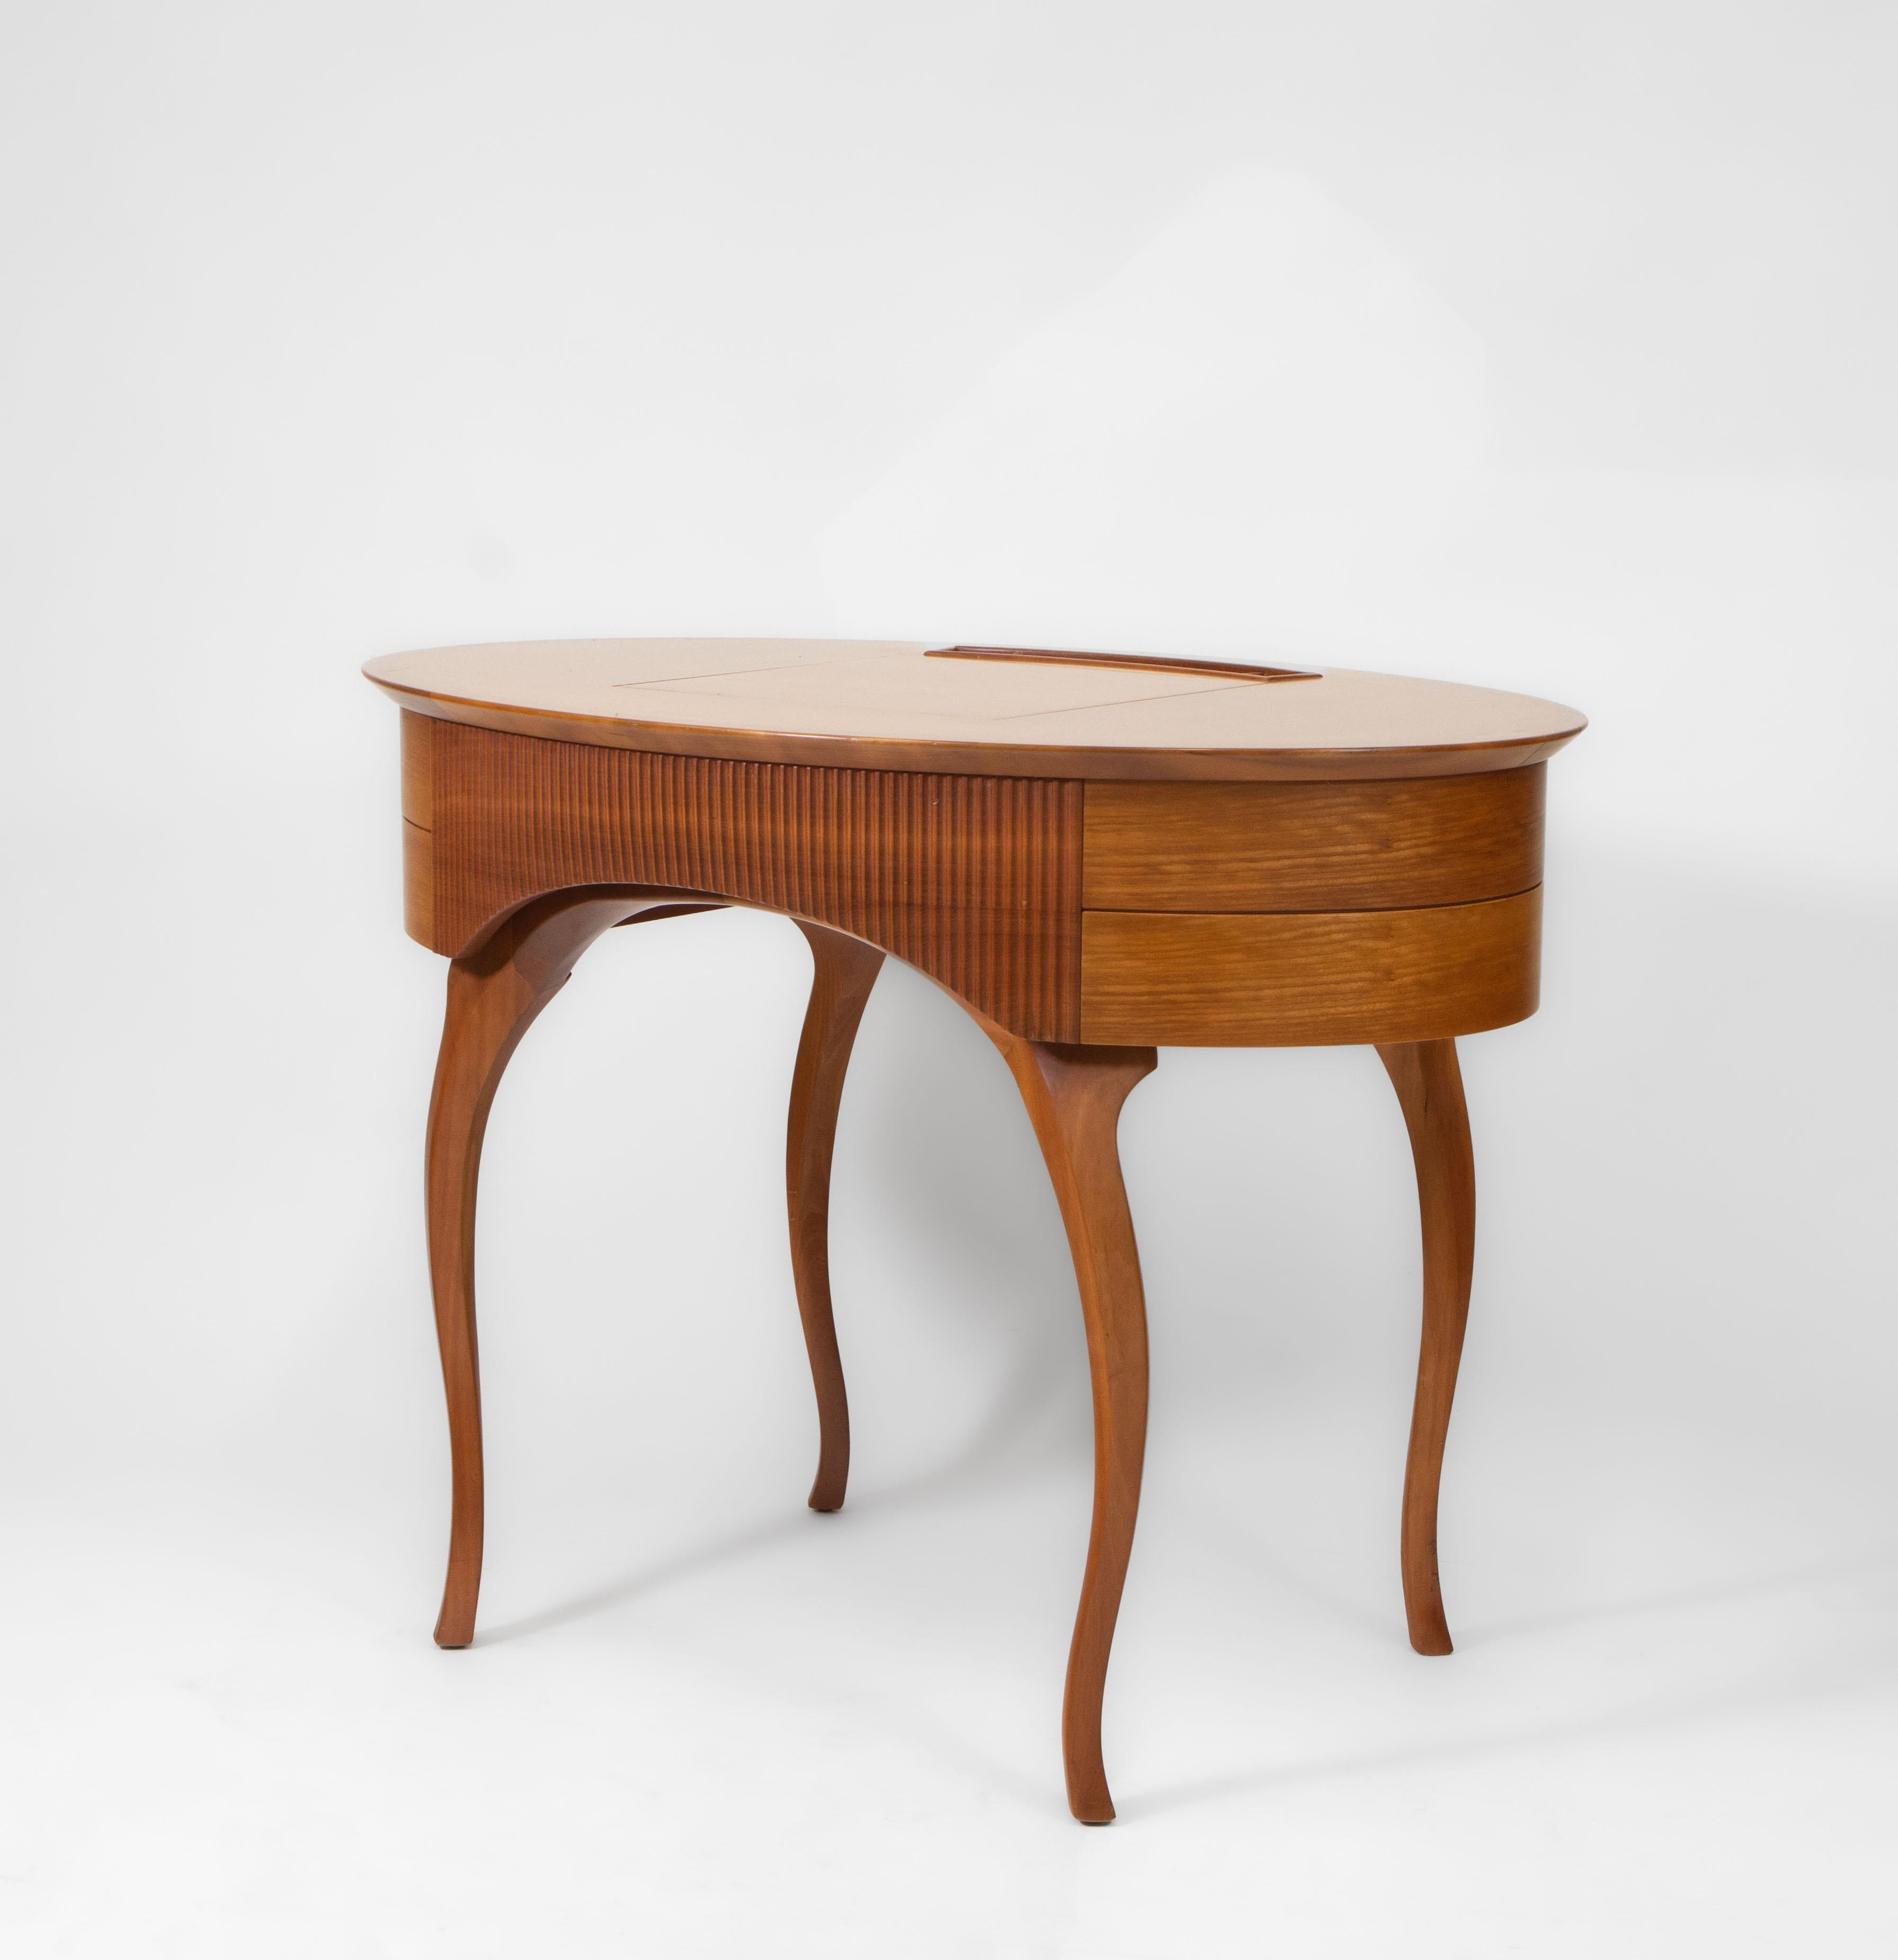 A Ceccotti 'Arabella' Cherrywood dressing table/desk designed in 1992 by Fabrizia Scassellati from Roberto Lazzeroni's work. Branded 'Ceccotti Collezioni. Made in Italy' Circa 1990s.

Influenced by the eclectic and surrealistic world of Gaudi,